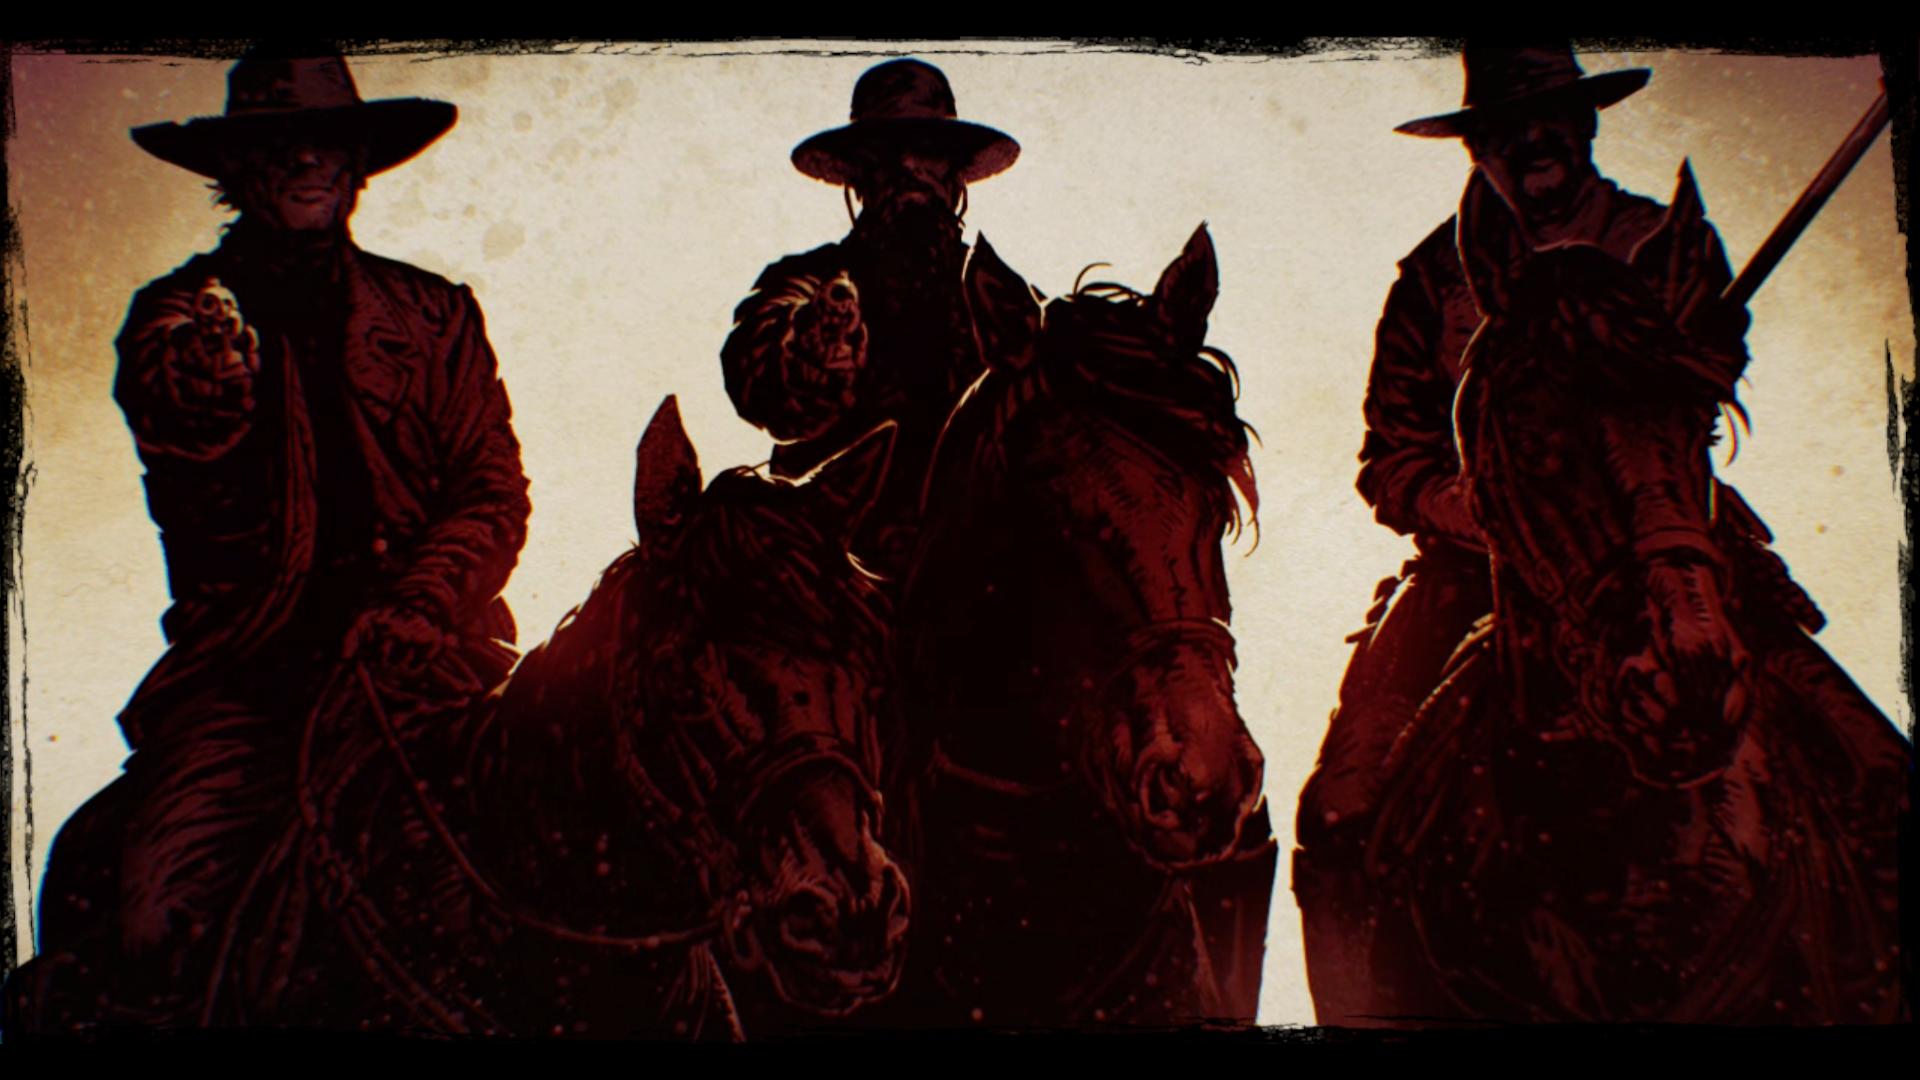 Alfa Img Showing Gt Western Gunslinger Wallpaper